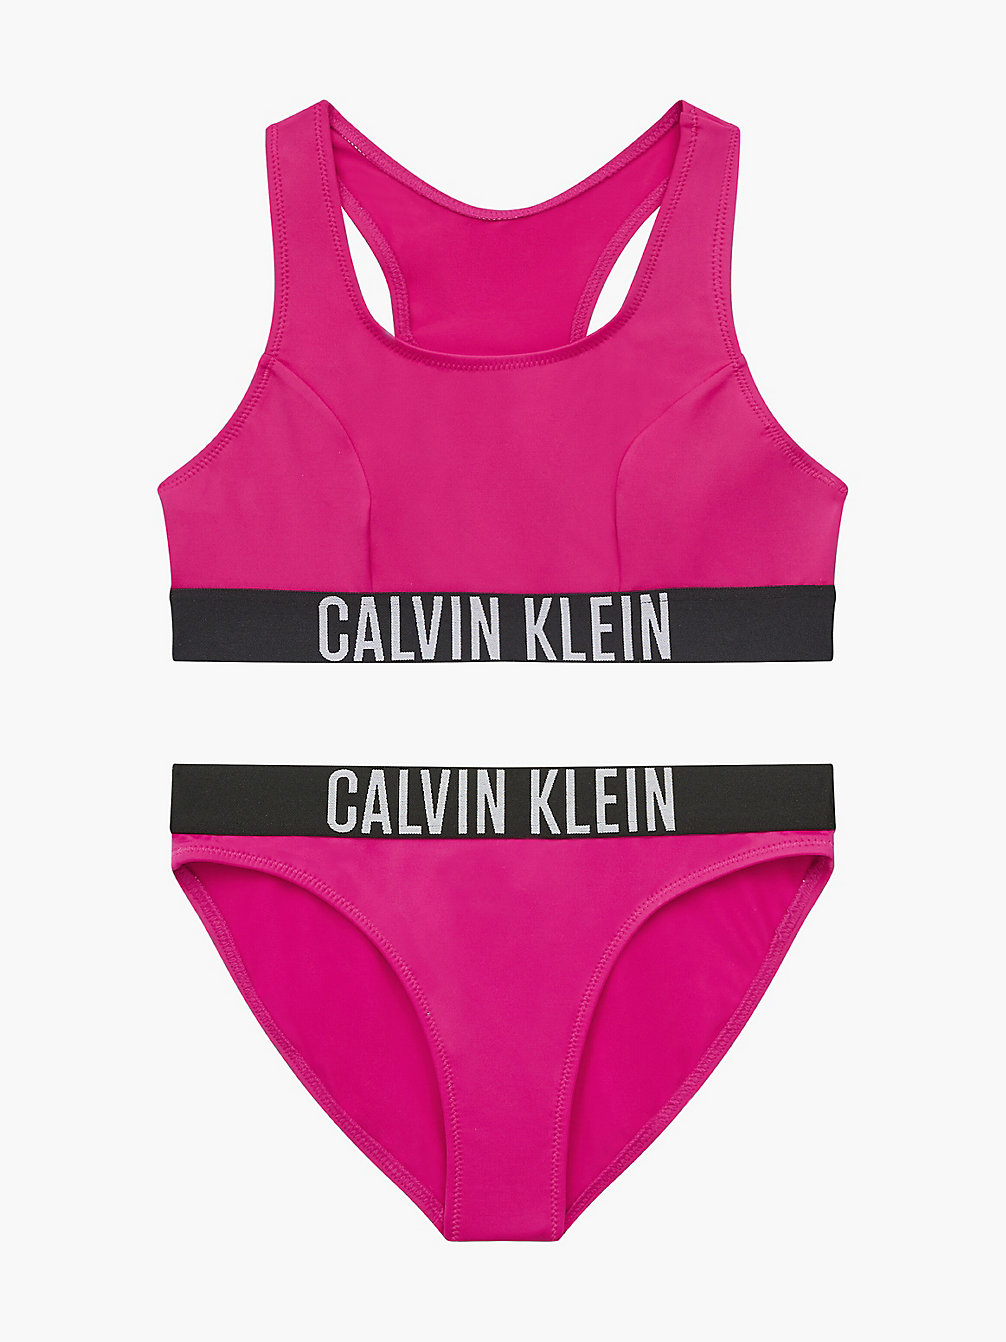 ROYAL PINK > Meisjesbralette Bikini - Intense Power > undefined girls - Calvin Klein